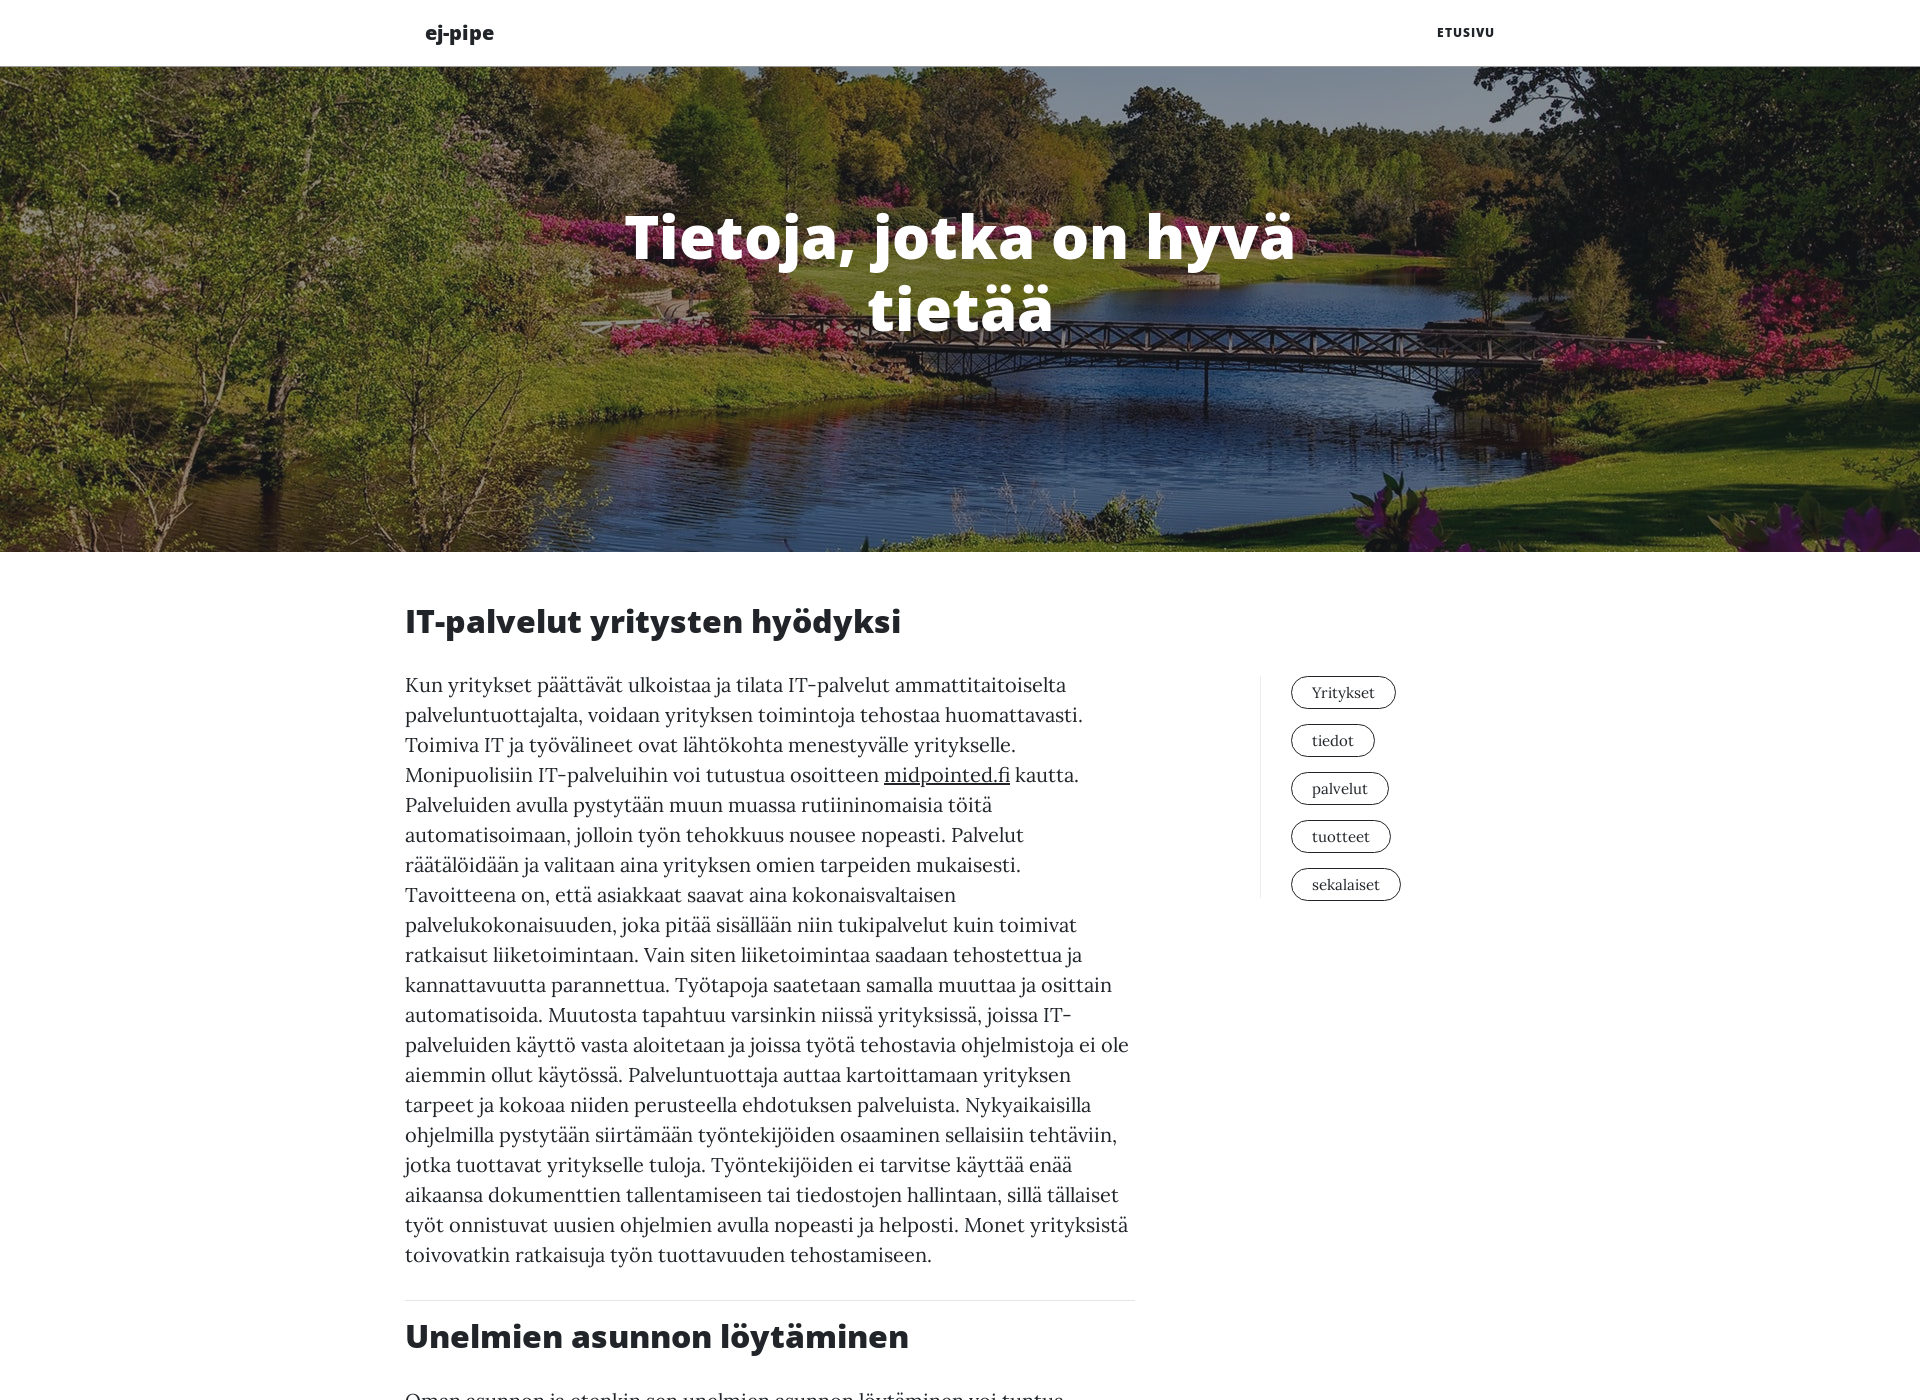 Screenshot for ej-pipeline.fi